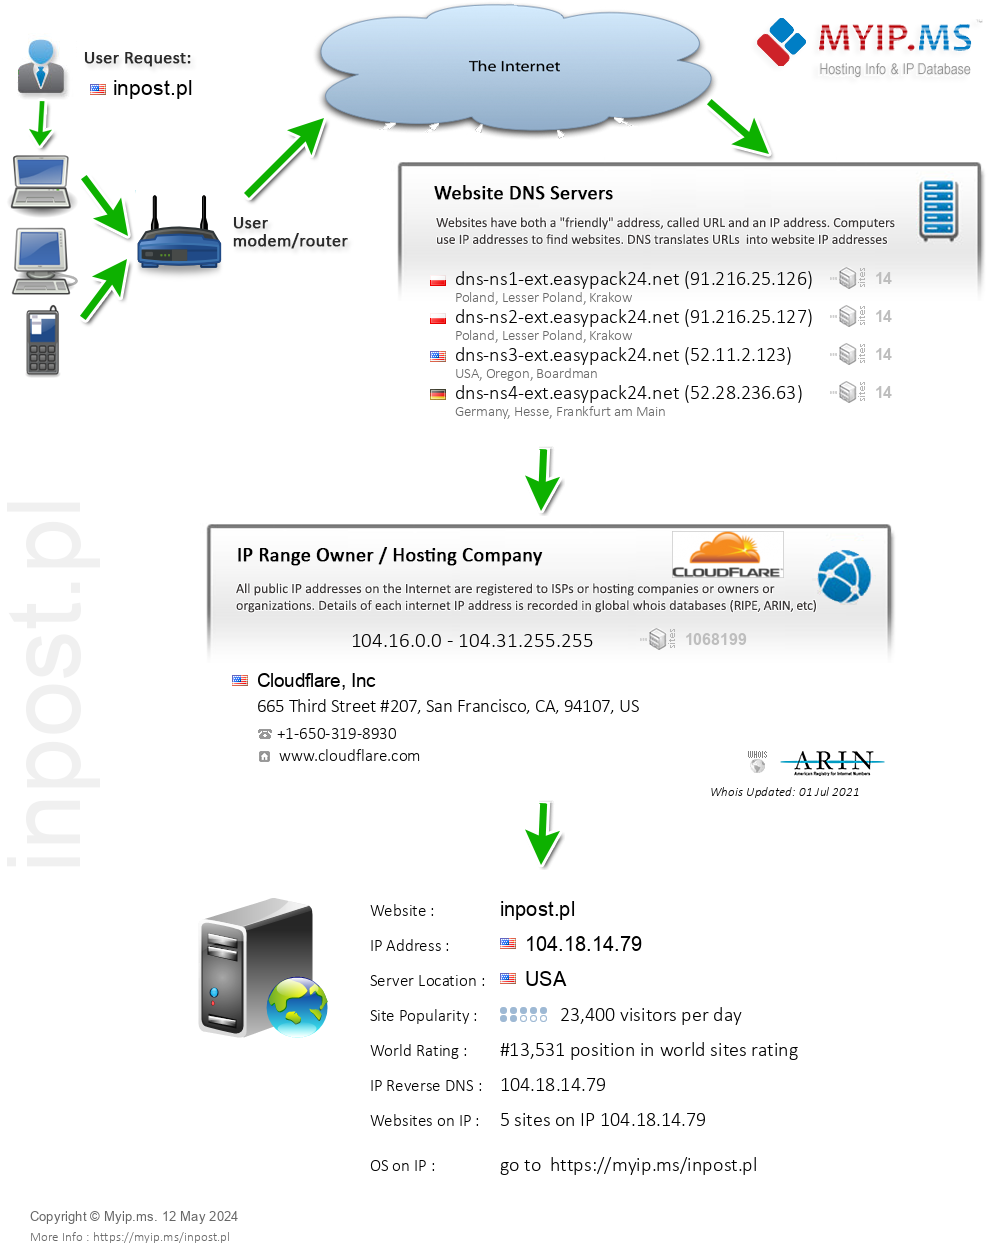 Inpost.pl - Website Hosting Visual IP Diagram